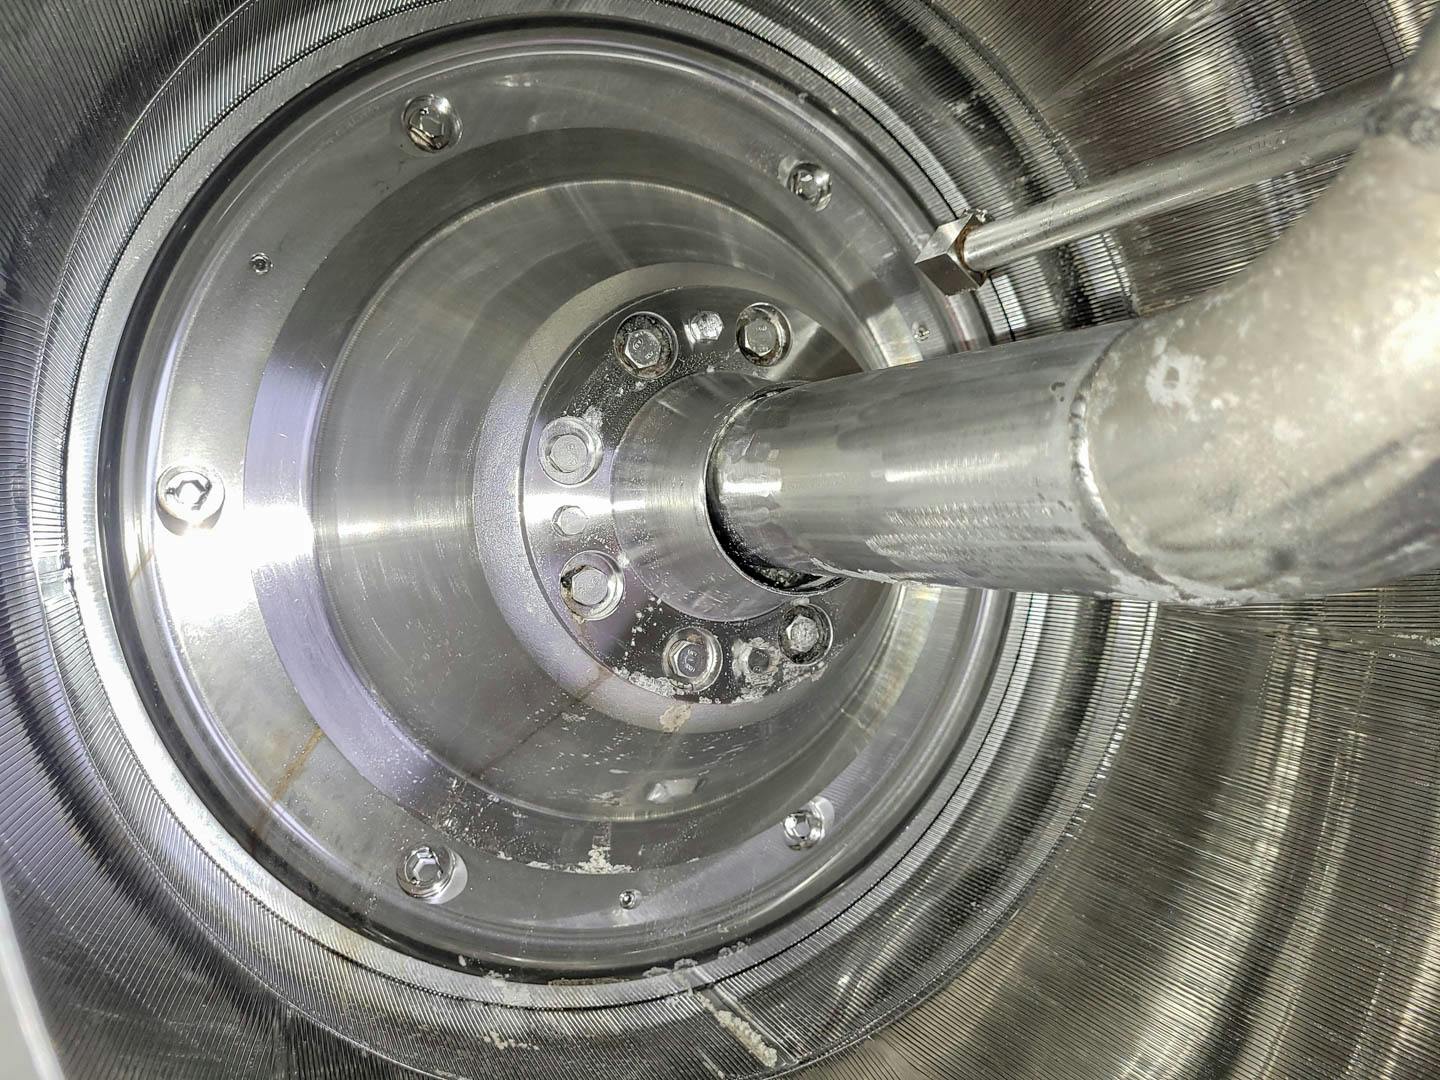 Krauss Maffei SZ 51-8 - Pusher centrifuge - image 6